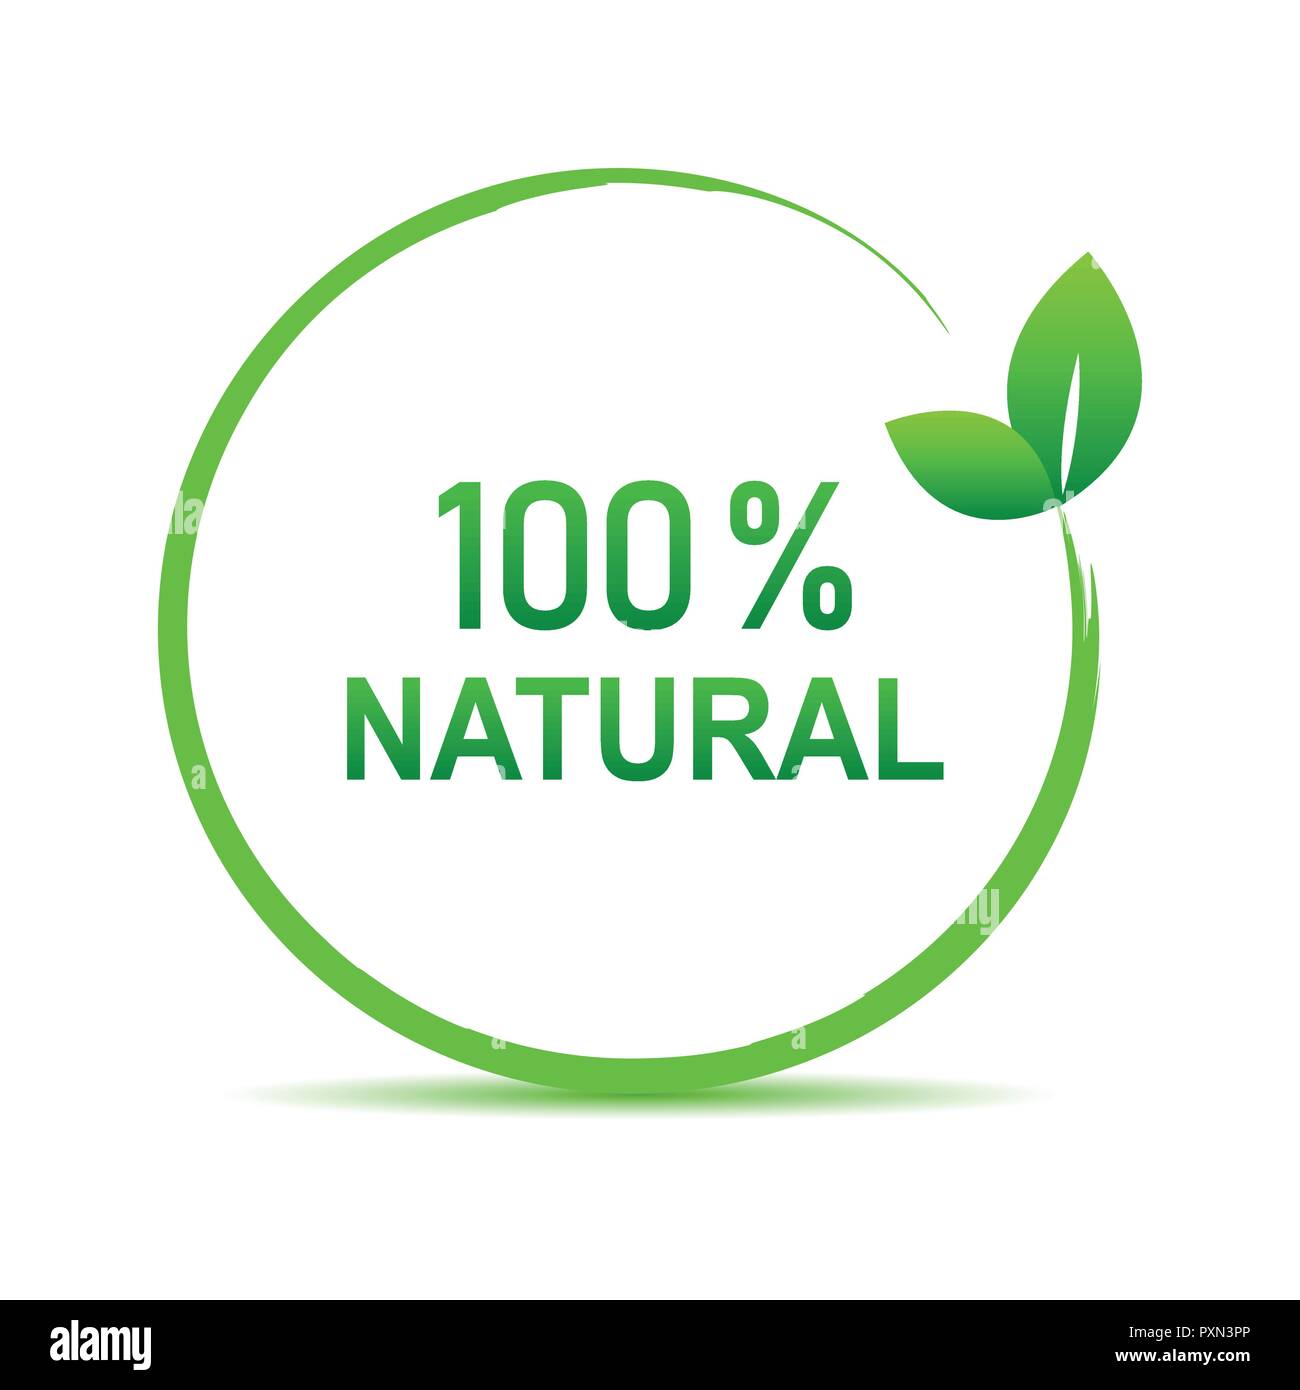 100 % natural symbole vert feuille avec illustration vecteur EPS10 Illustration de Vecteur